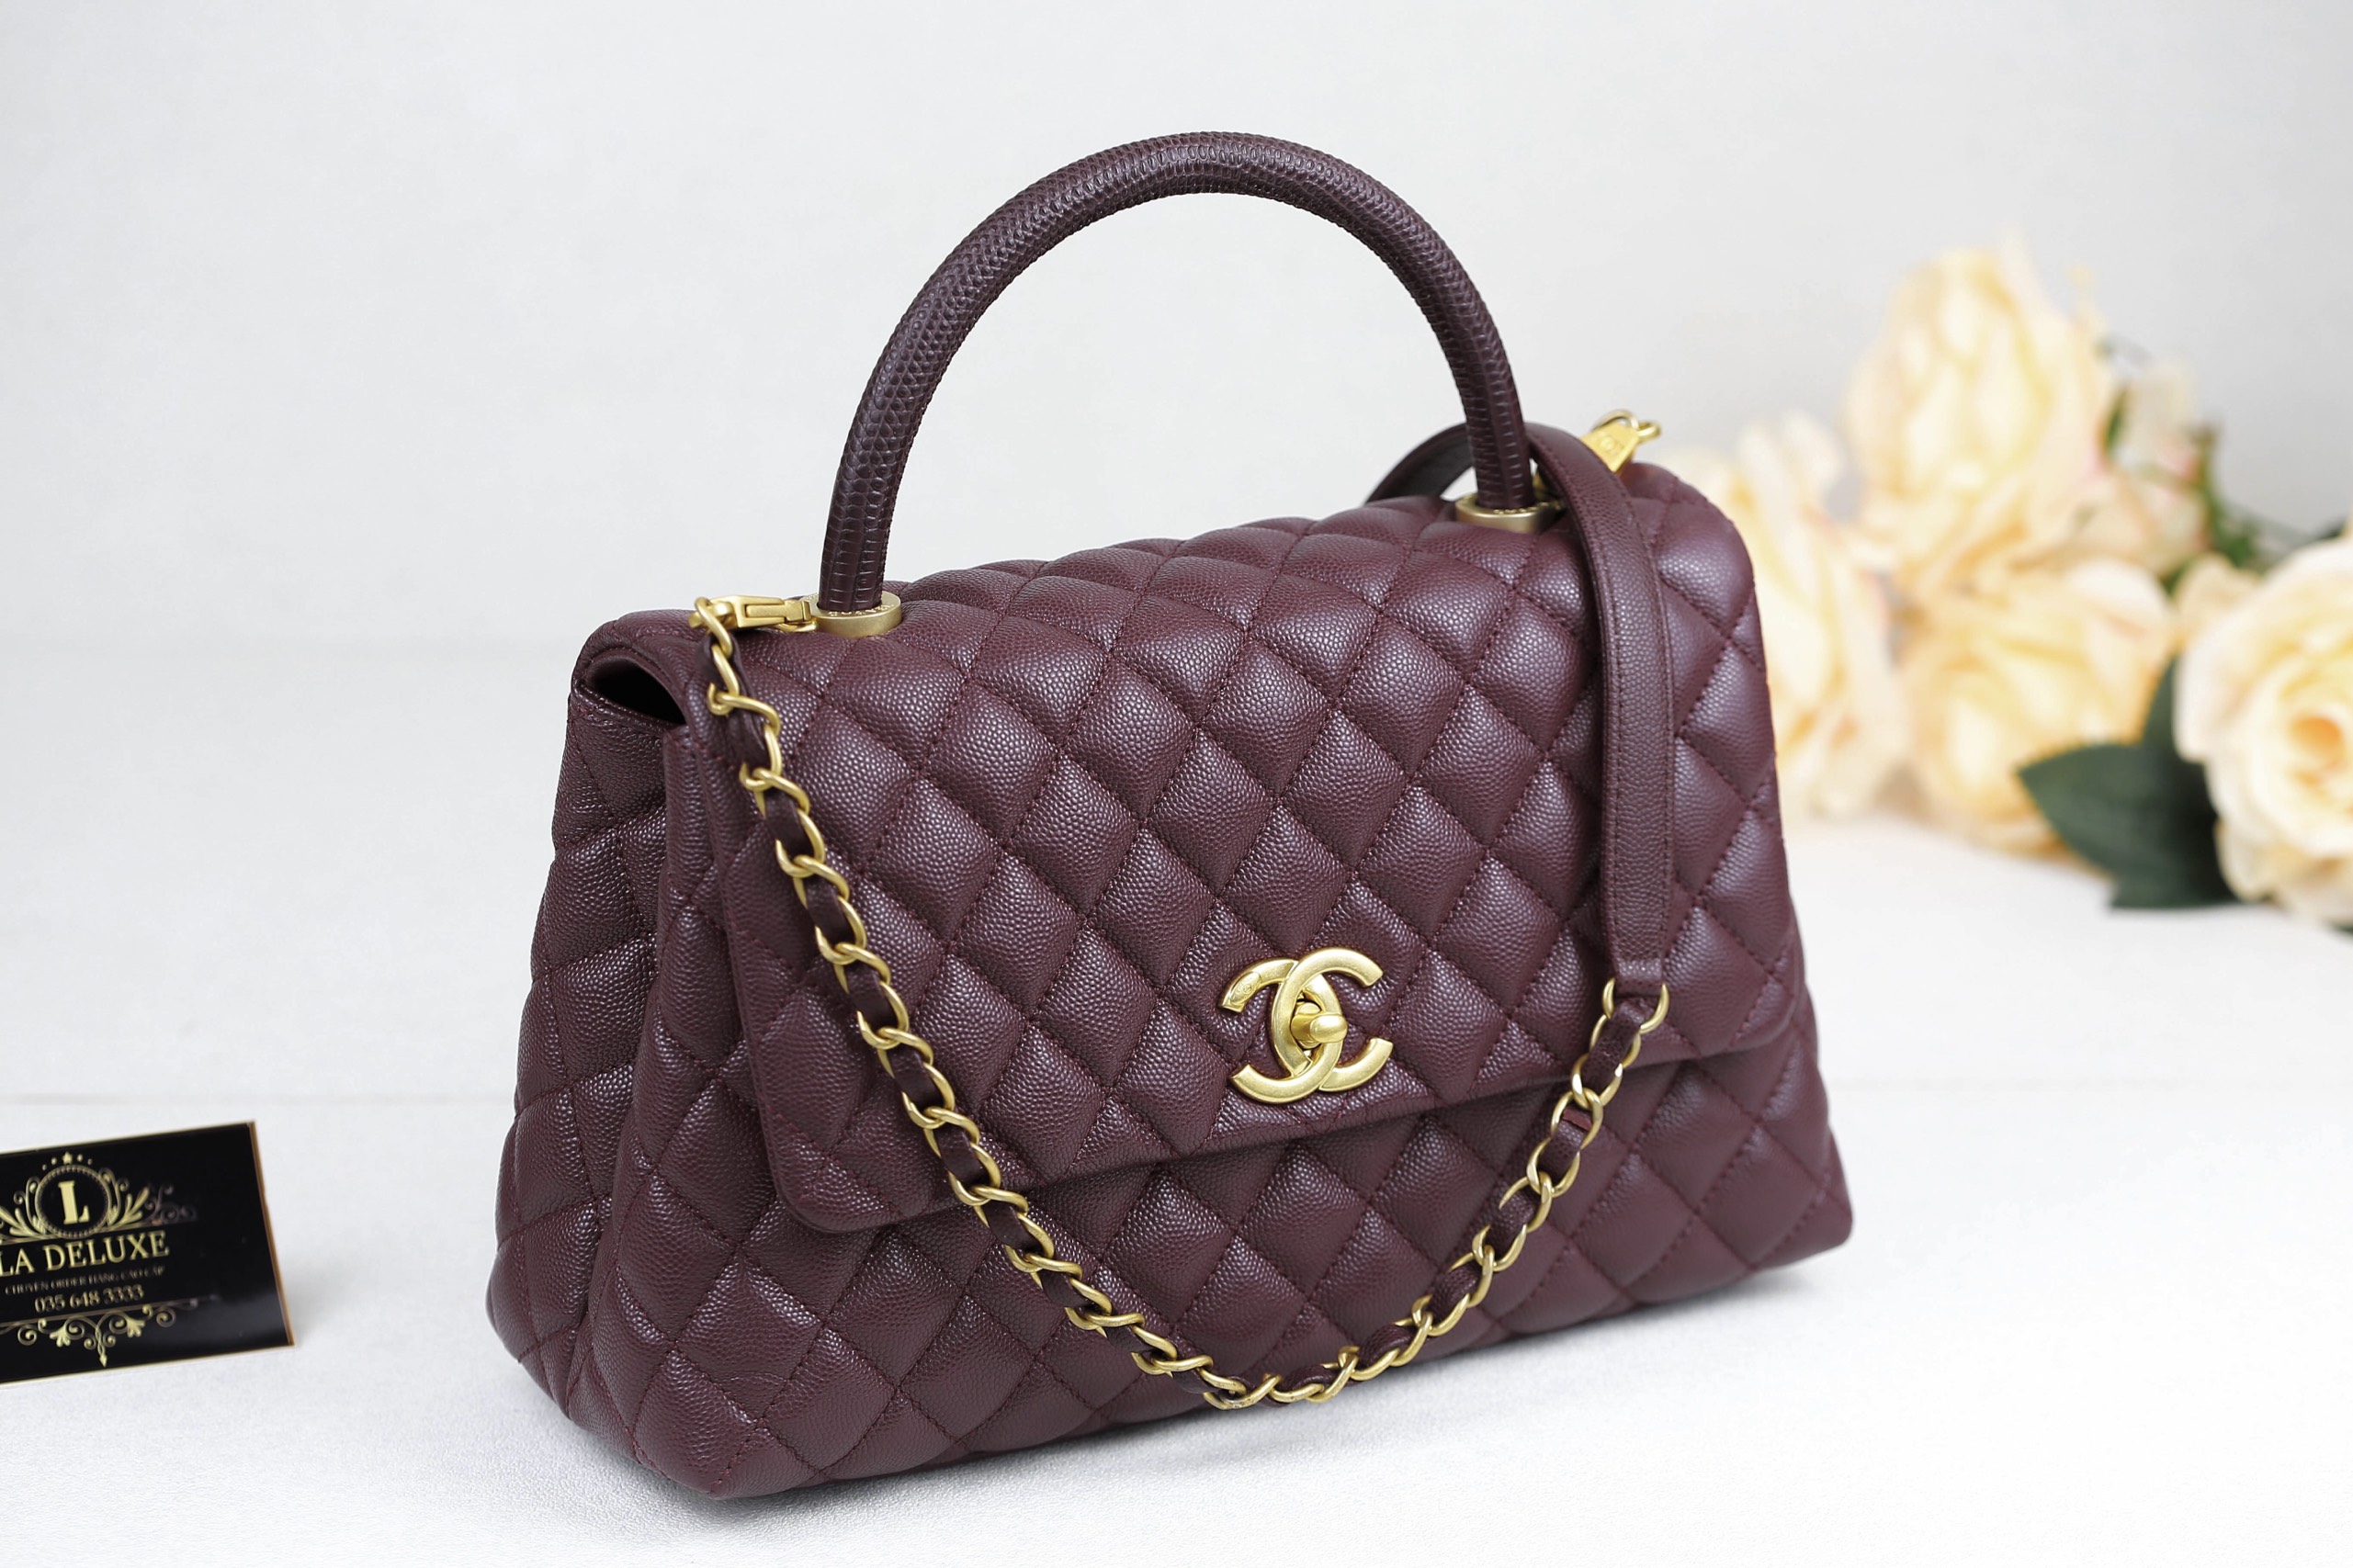 Chanel Coco Flap Bag With Top Handle  La Deluxe